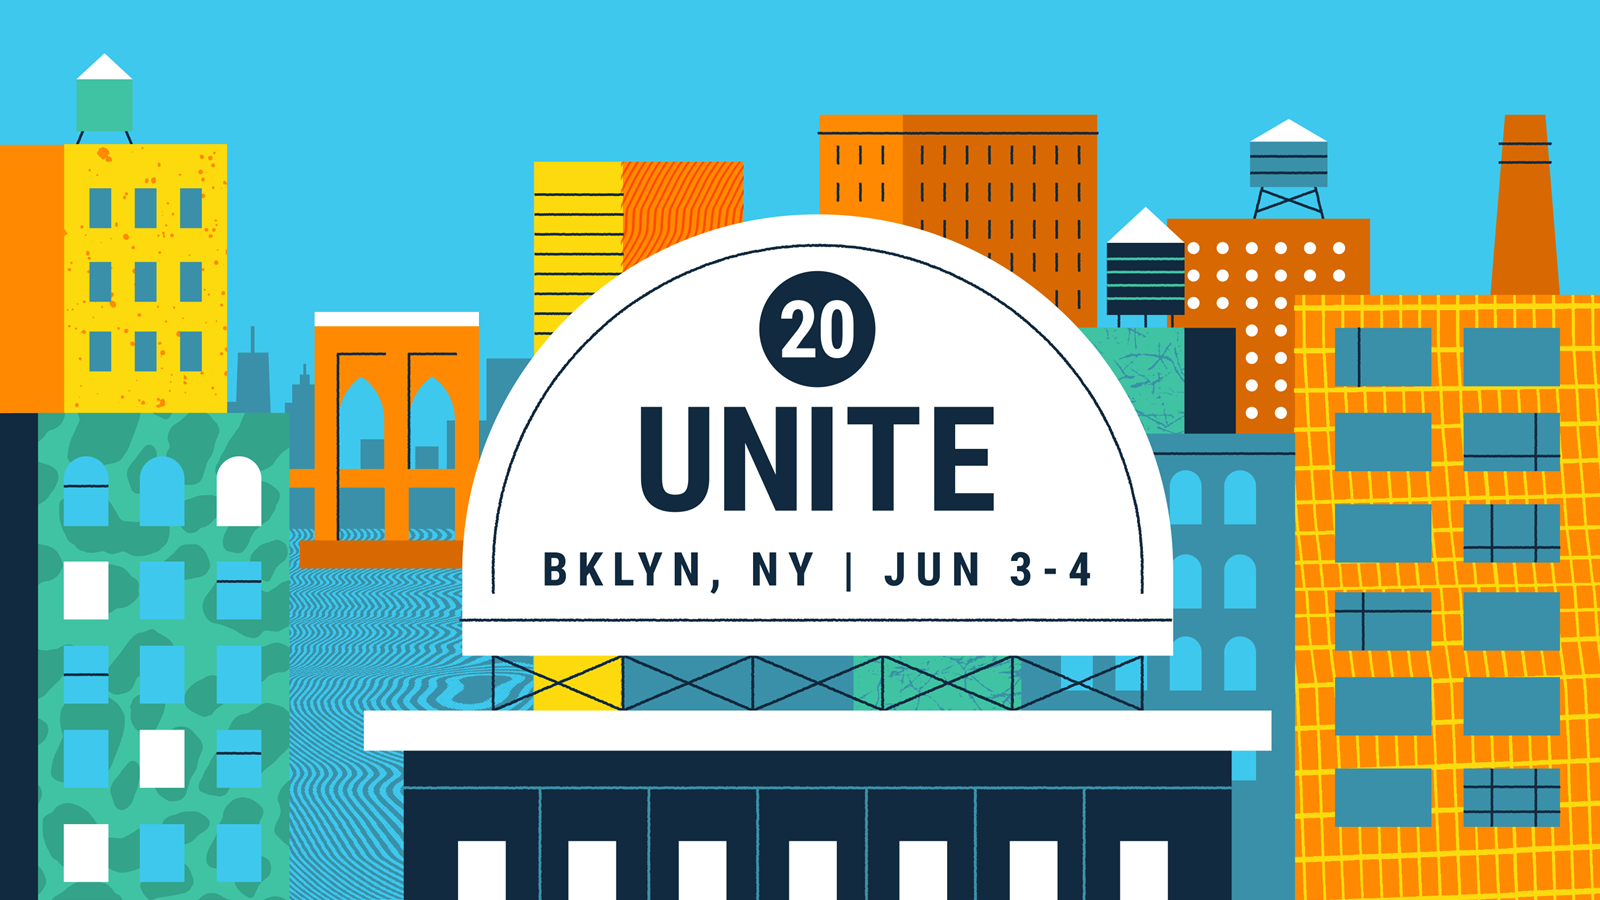 Unite 20 digital workplace conference